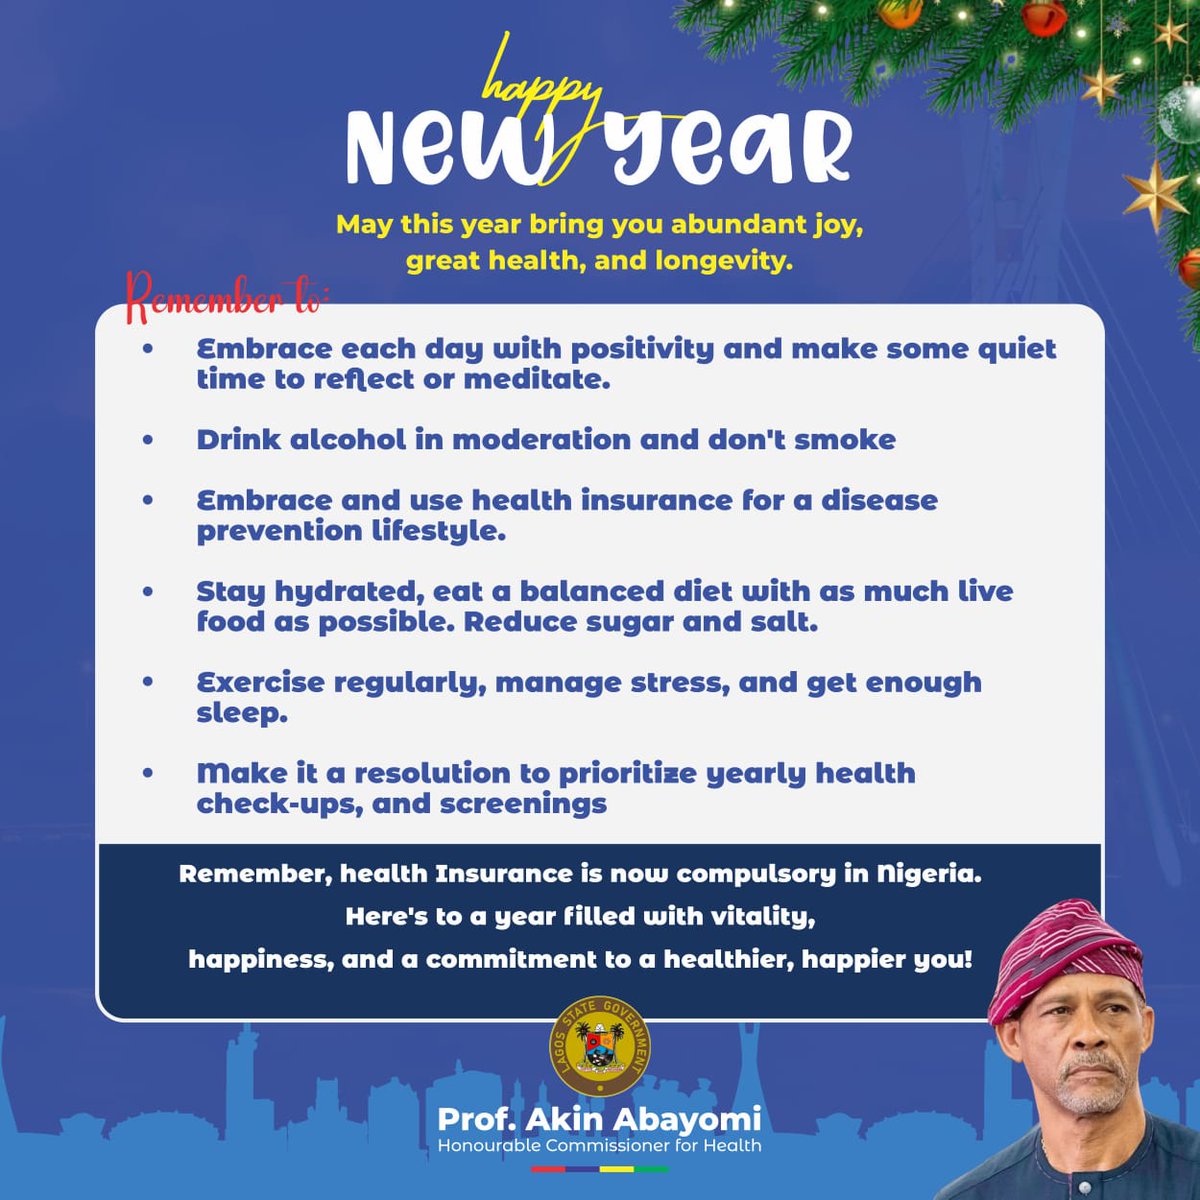 May year 2024 bring you abundant joy, great health and longeviry. Happy new year. May this year be our best year ever. @jidesanwoolu @drobafemihamzat @jidesanwoolu @followlasg @LSMOH @muhammadpate @officialABAT